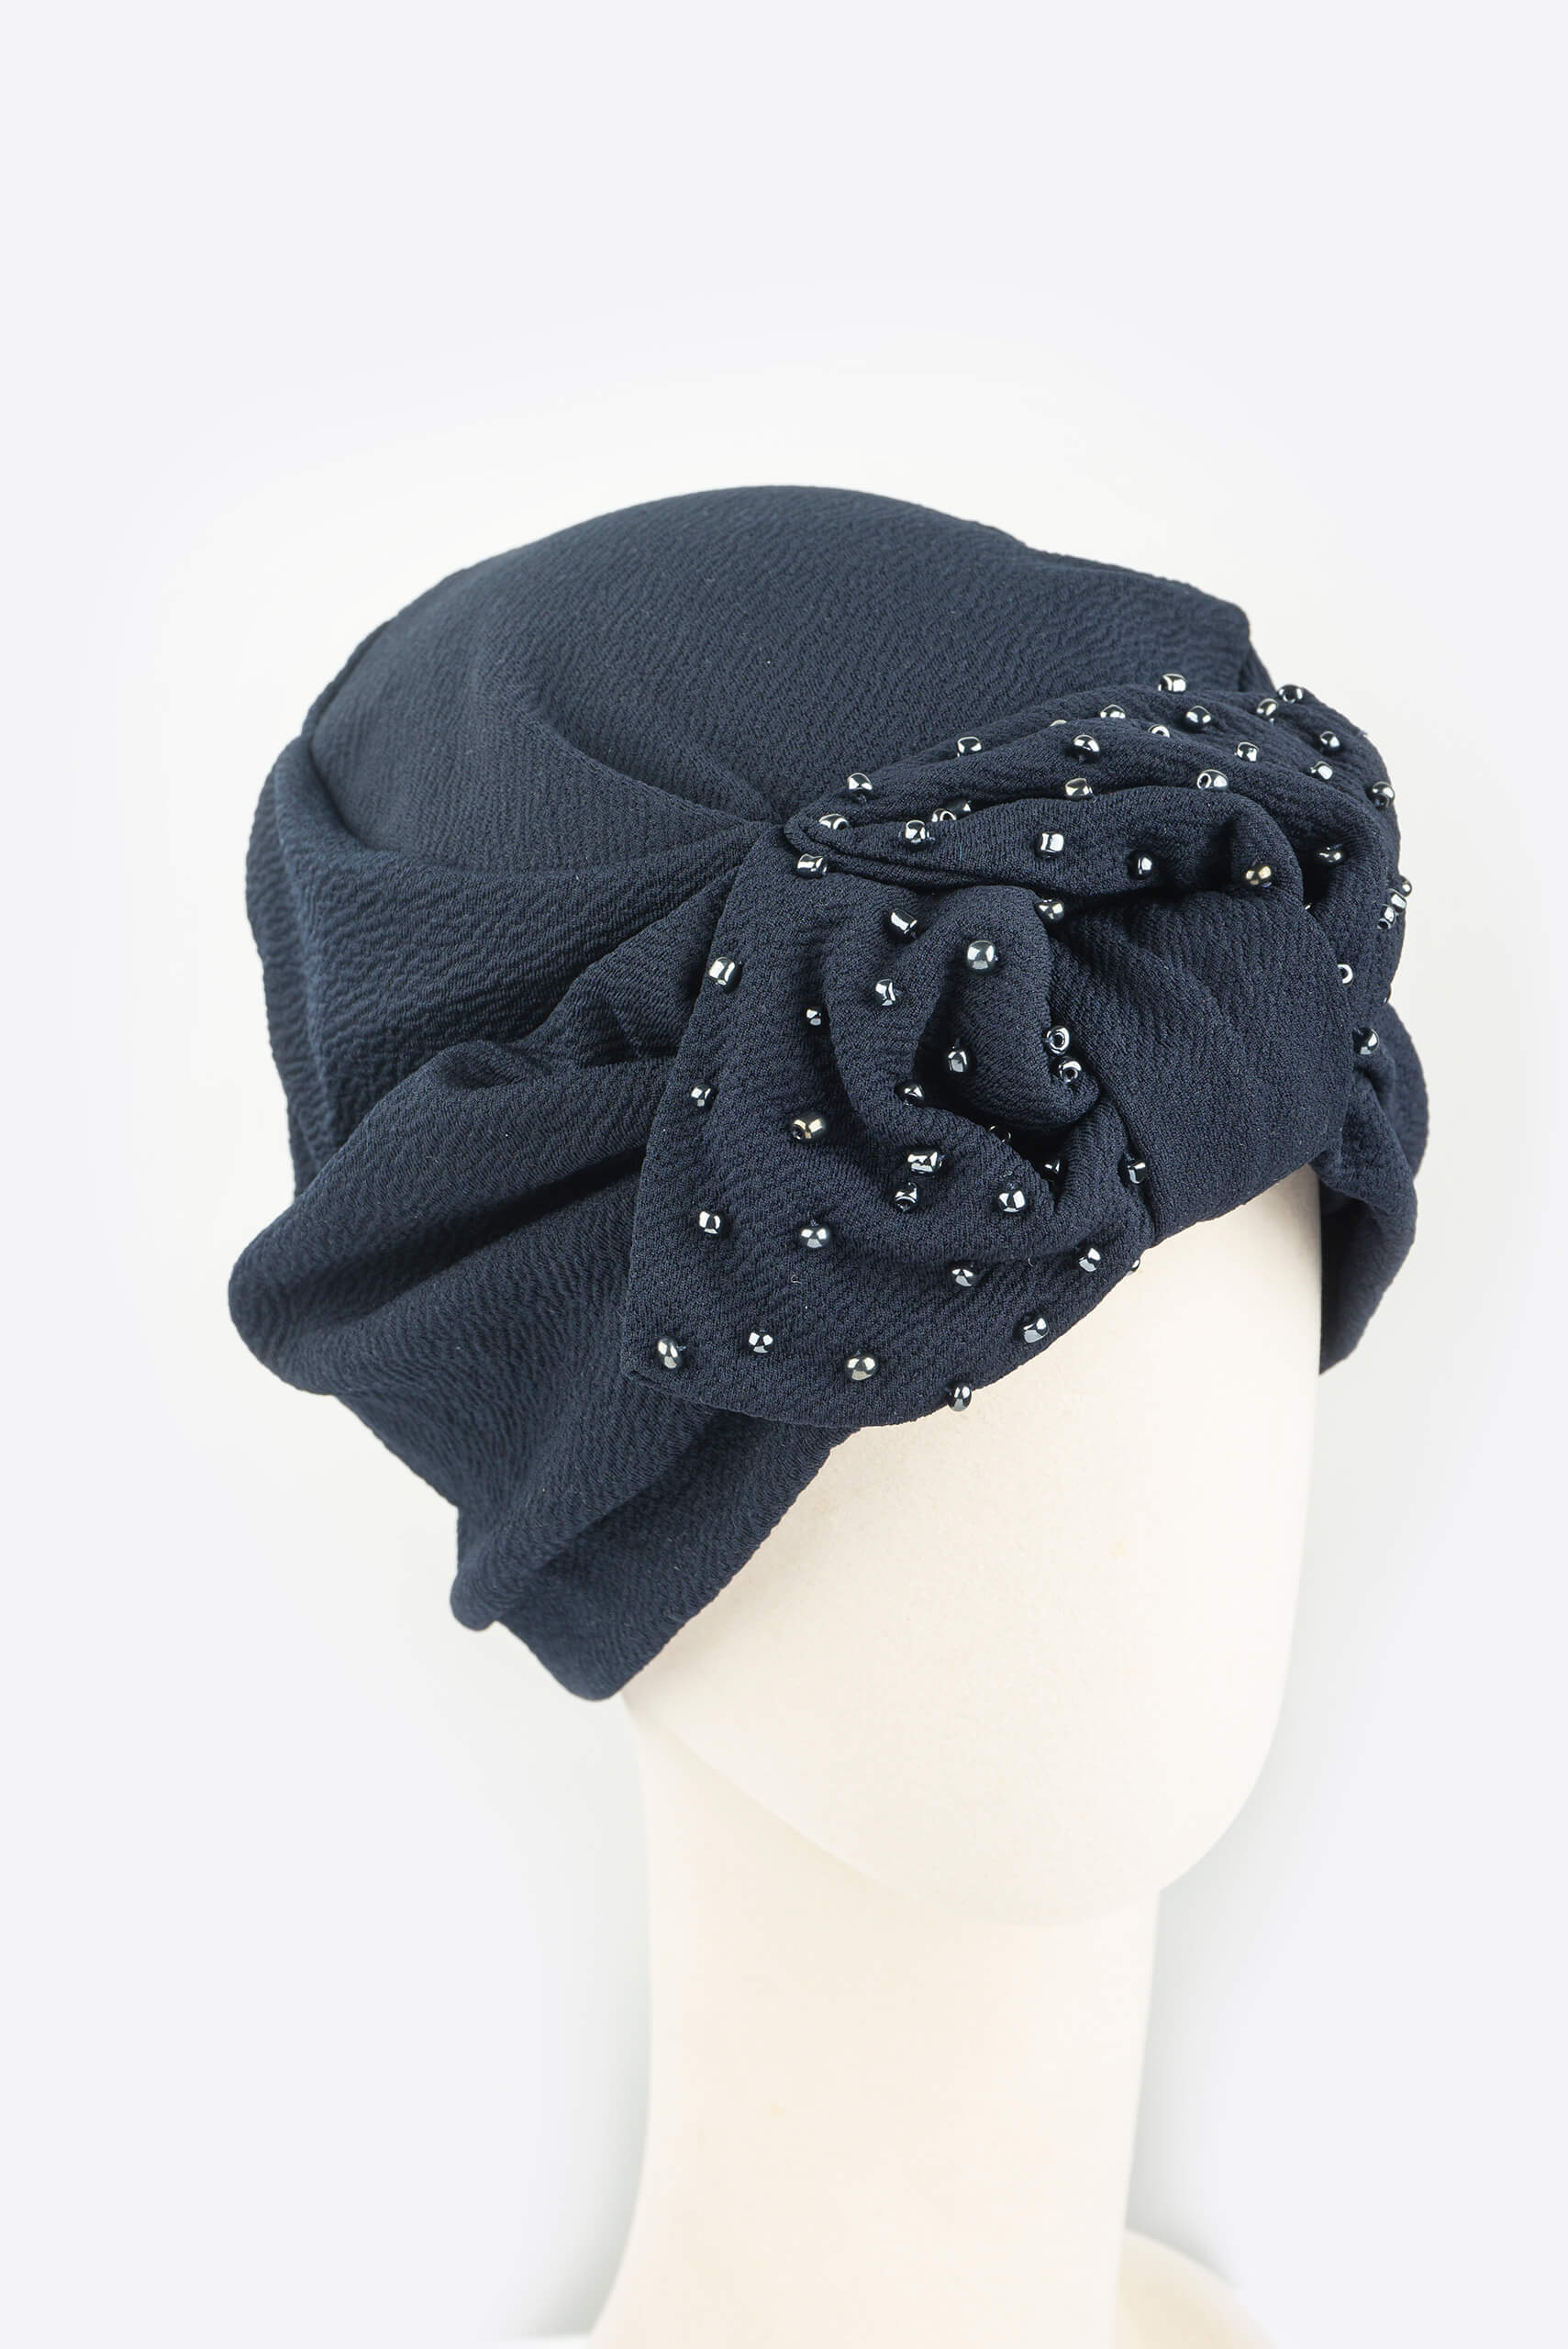 Bonnet Hijab Cap - Hijab Cap - Muslim Lifestyle Store